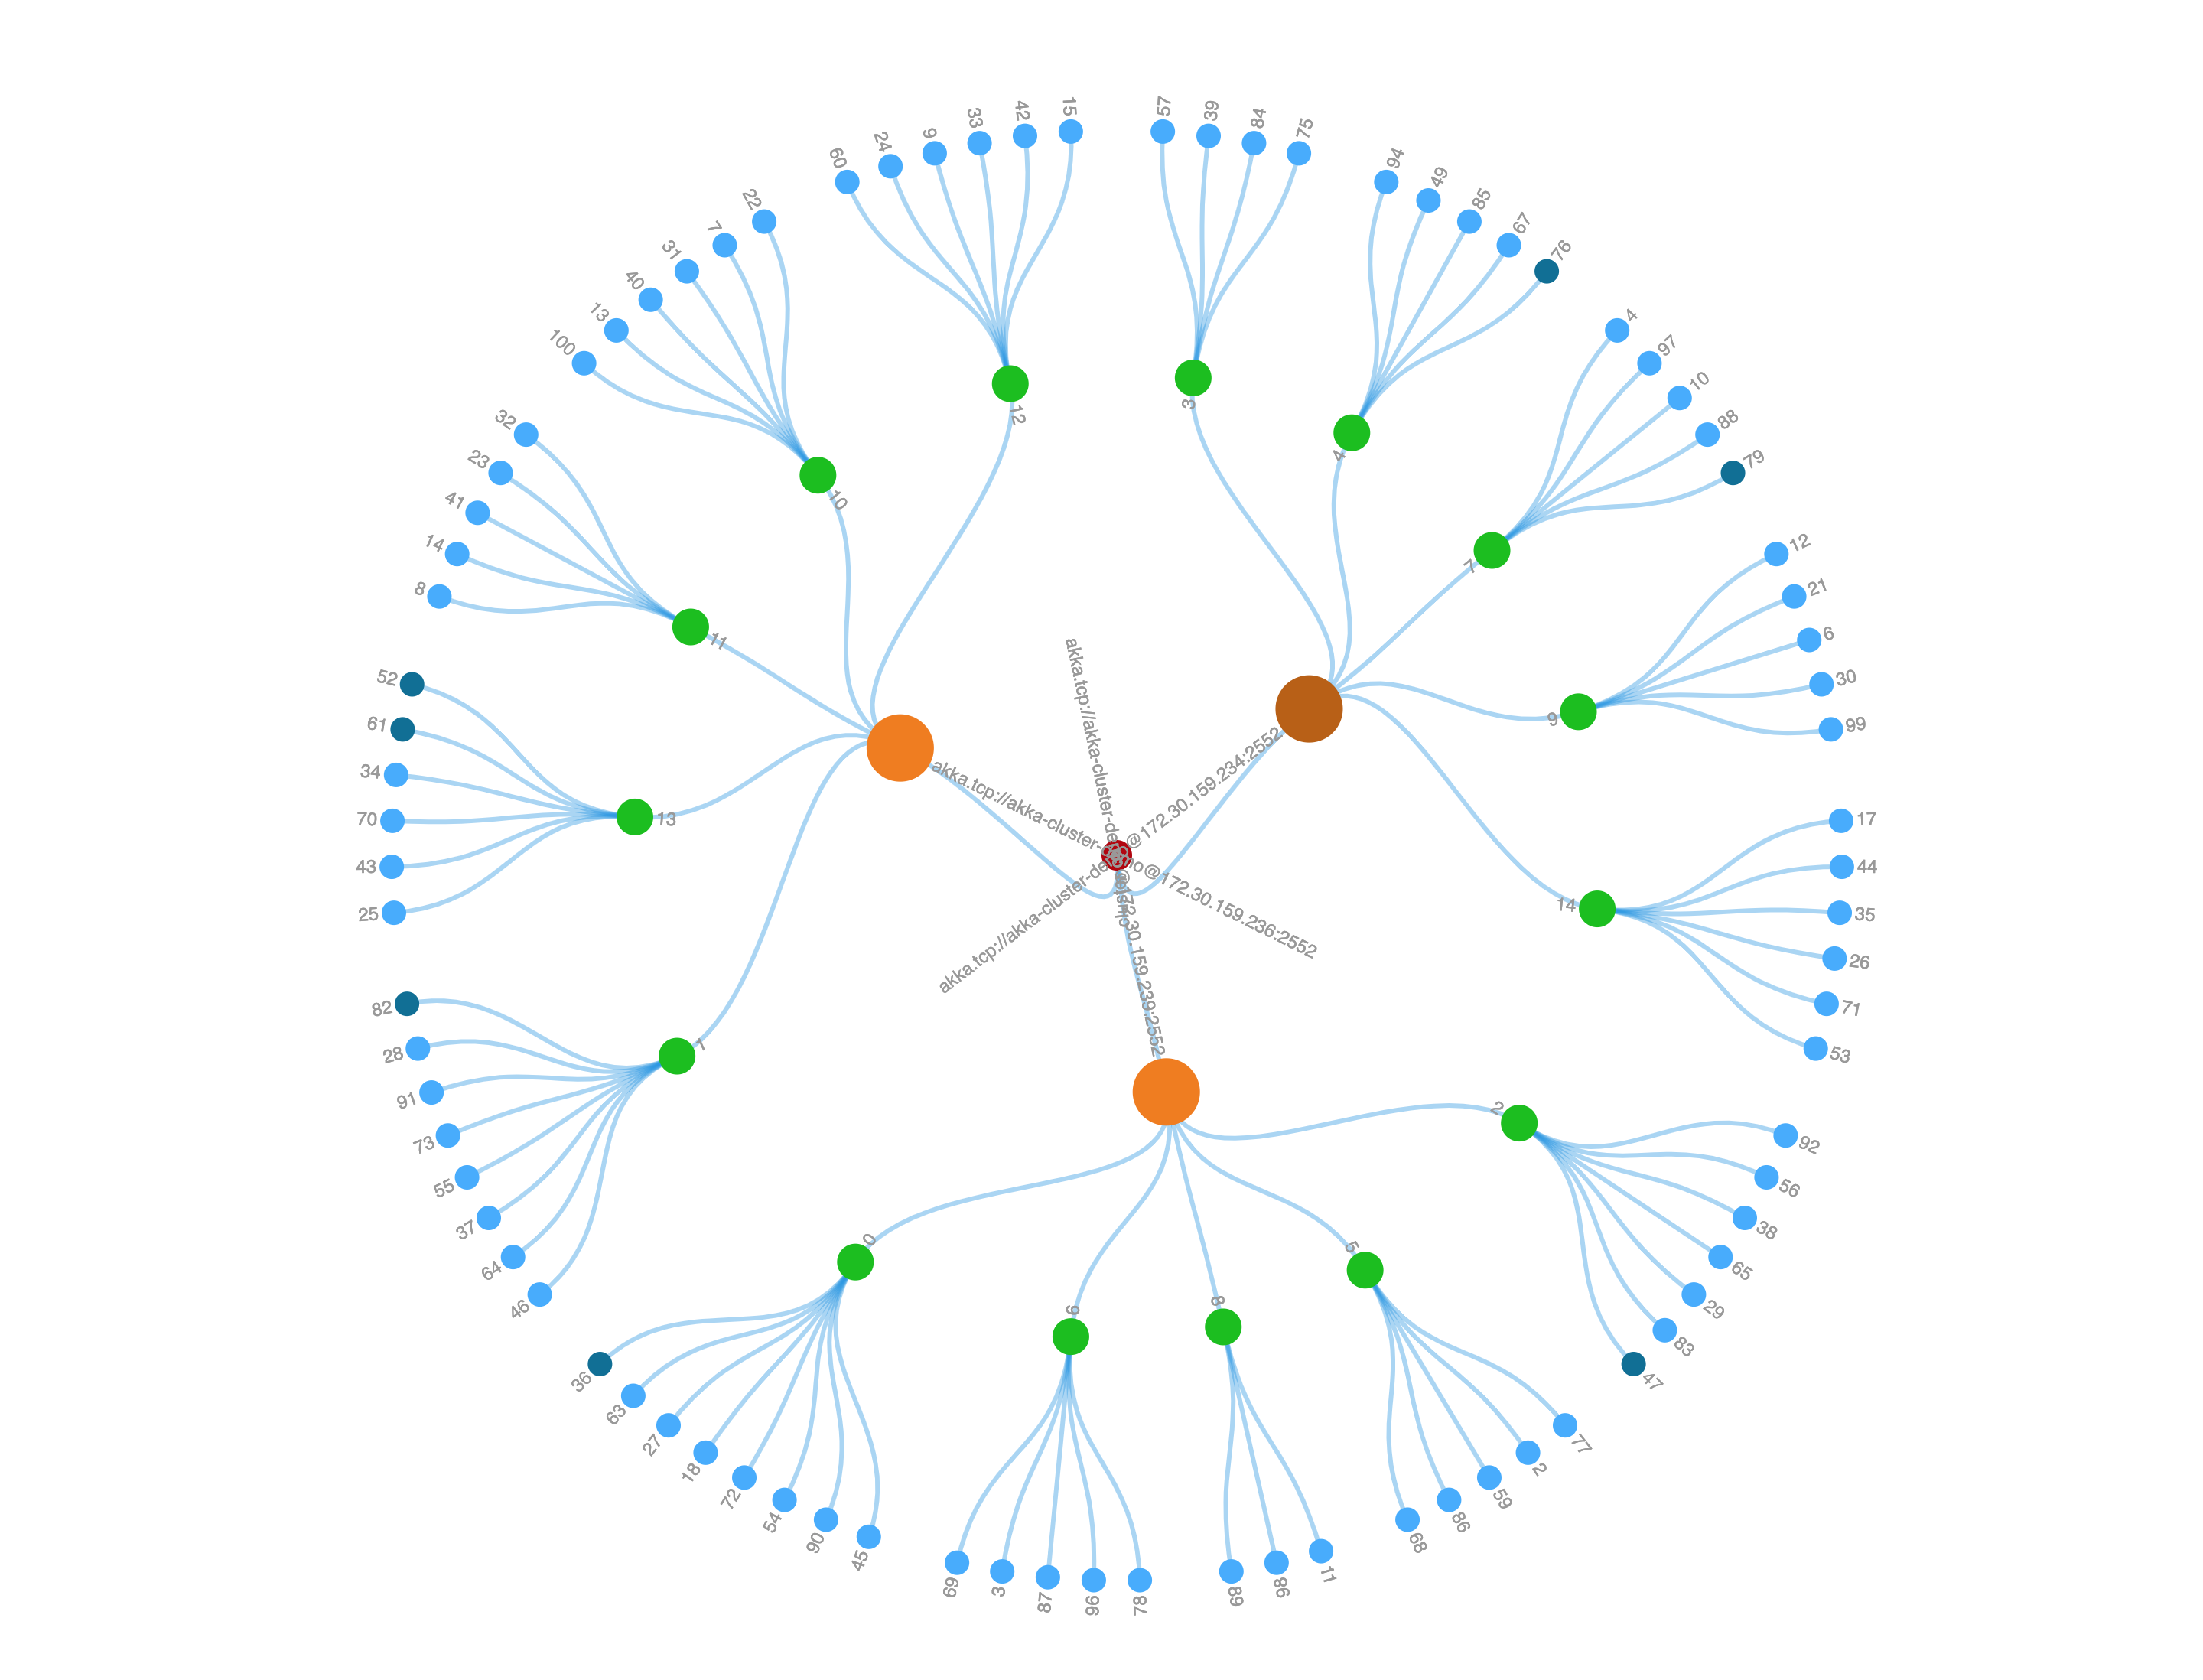 Visualization of cluster sharding